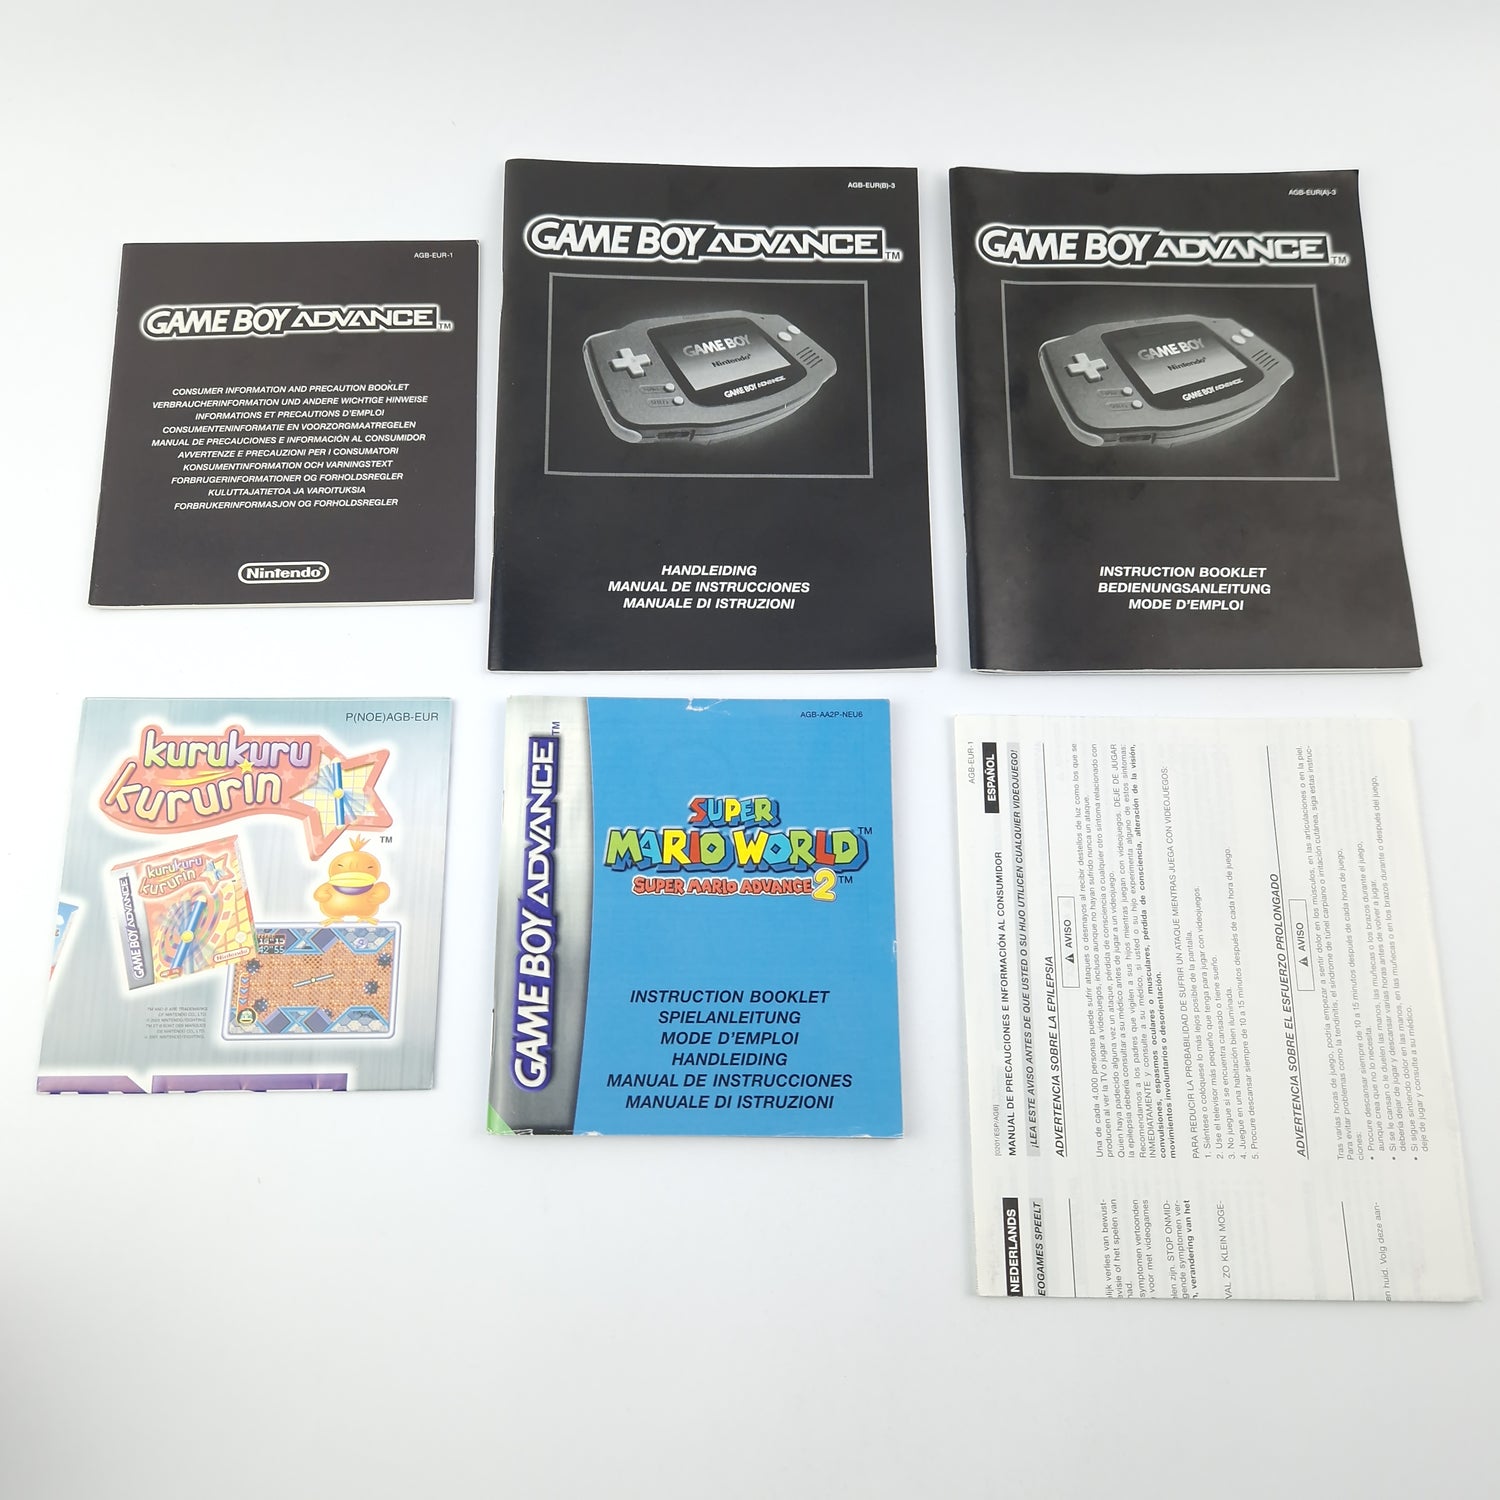 Nintendo Game Boy Advance + Super Mario World Bundle Pak OVP - PAL Console GBA